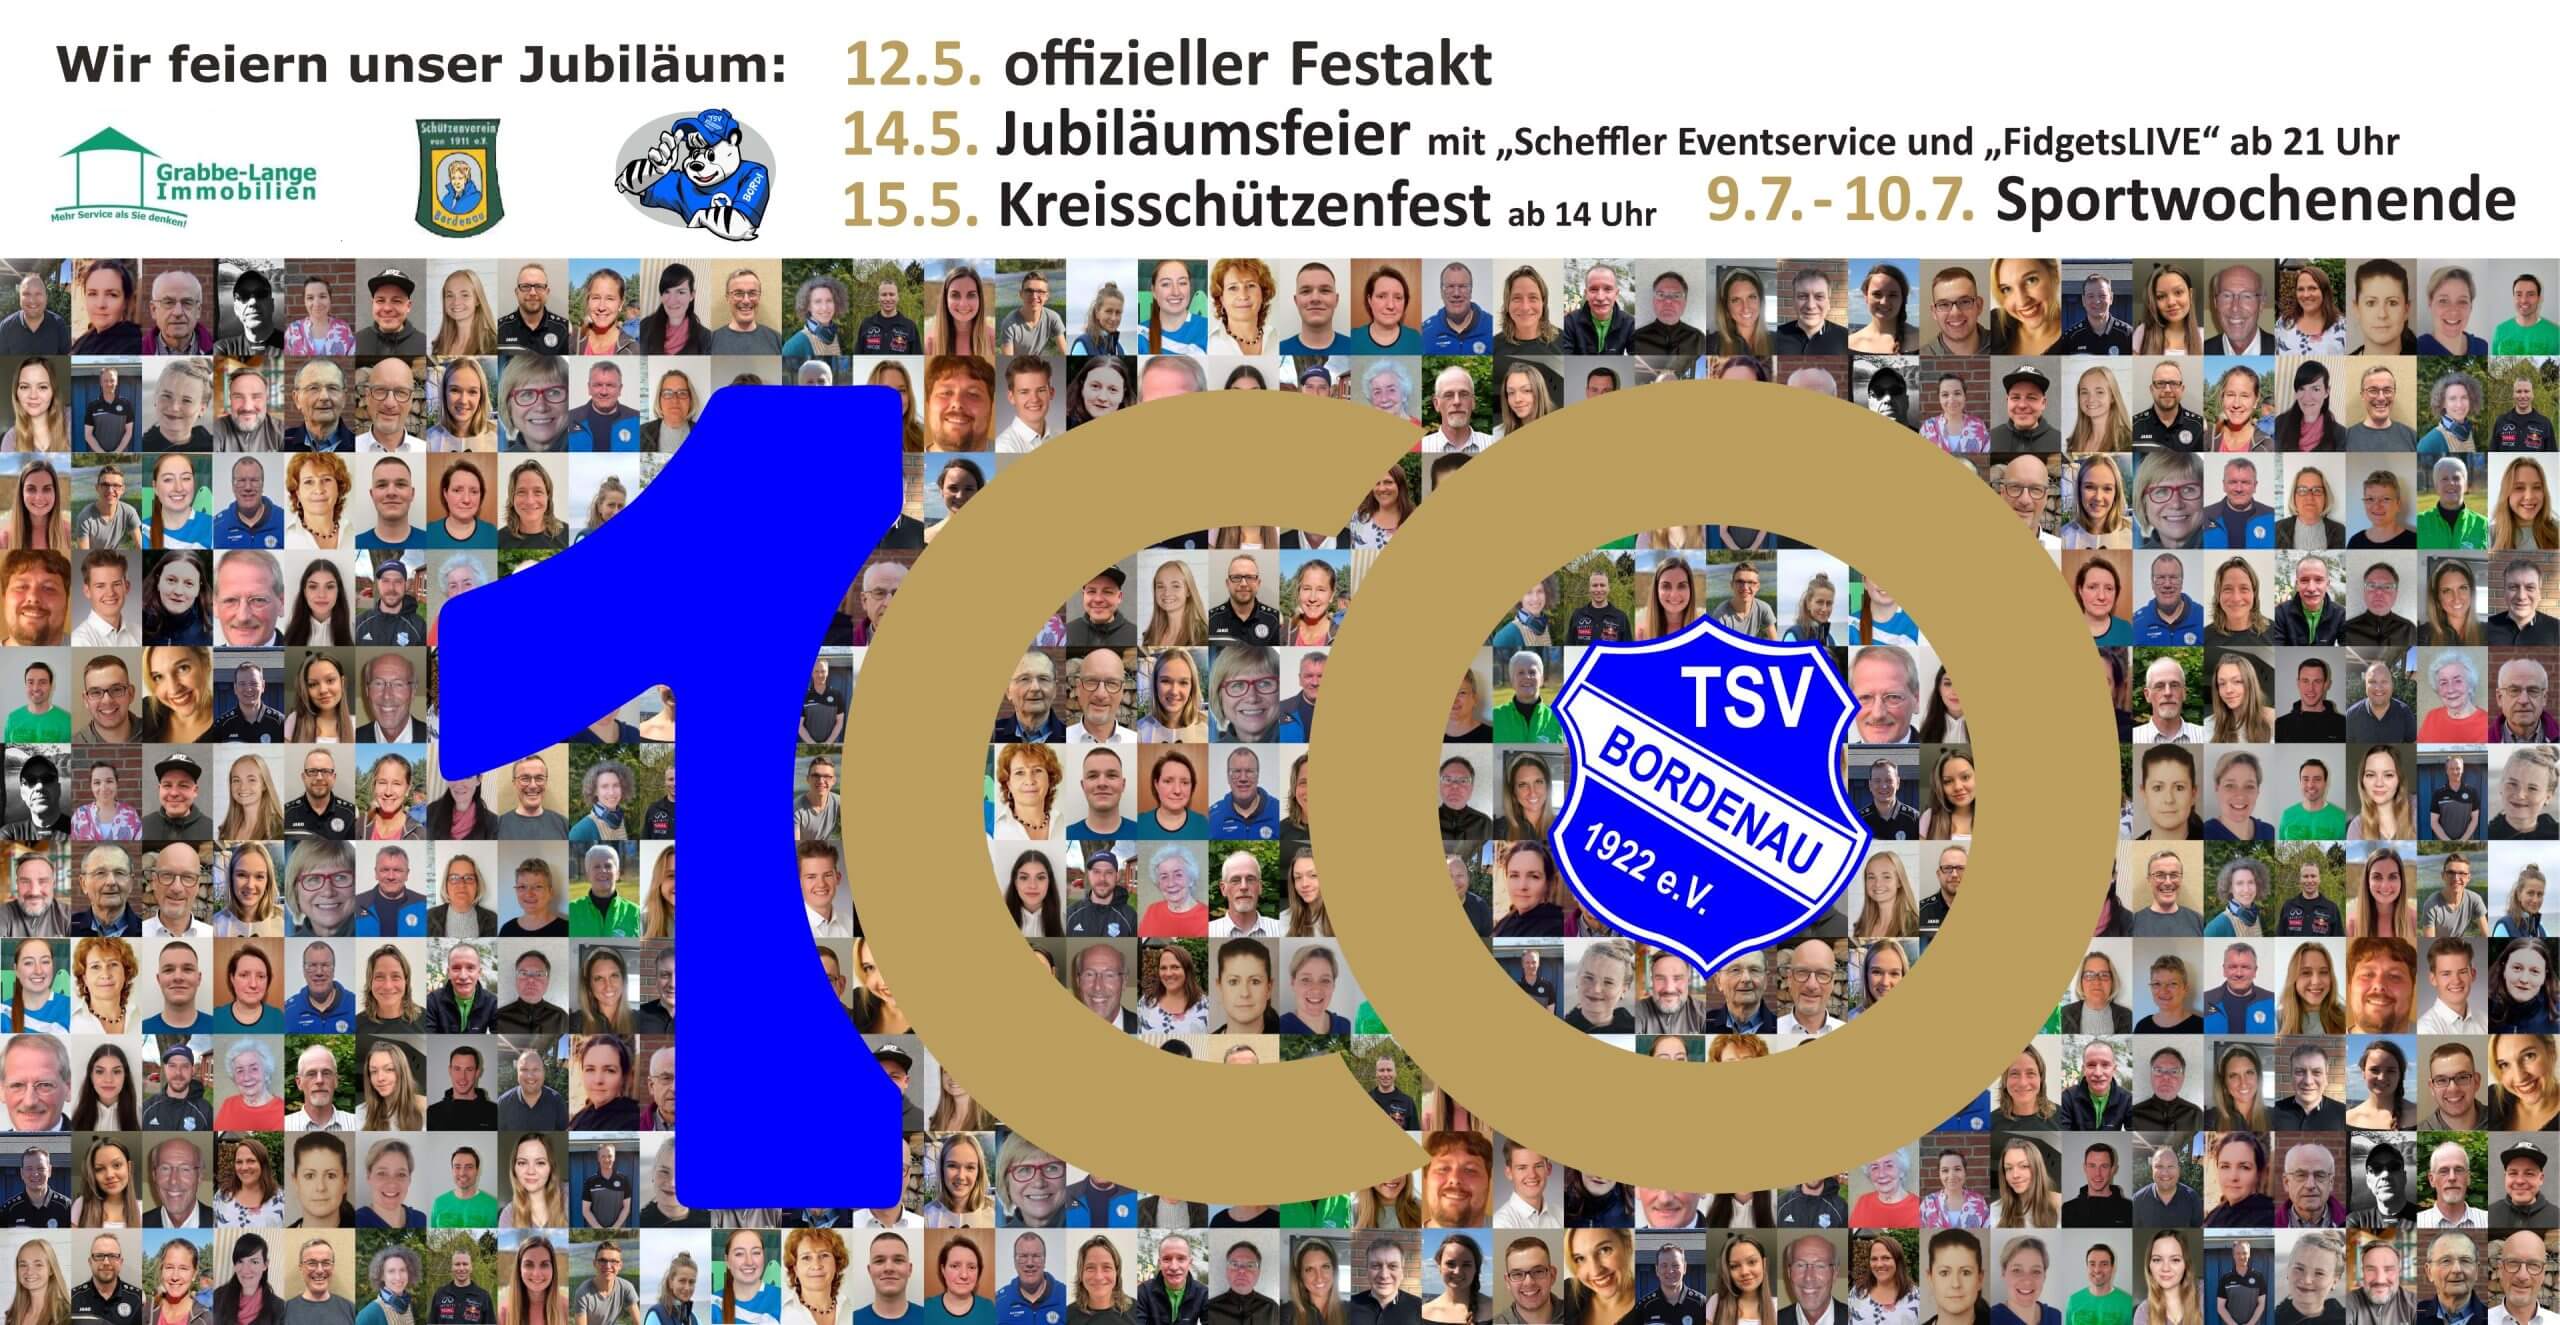 TSV Bordenau 100 Jahre Jubiläum